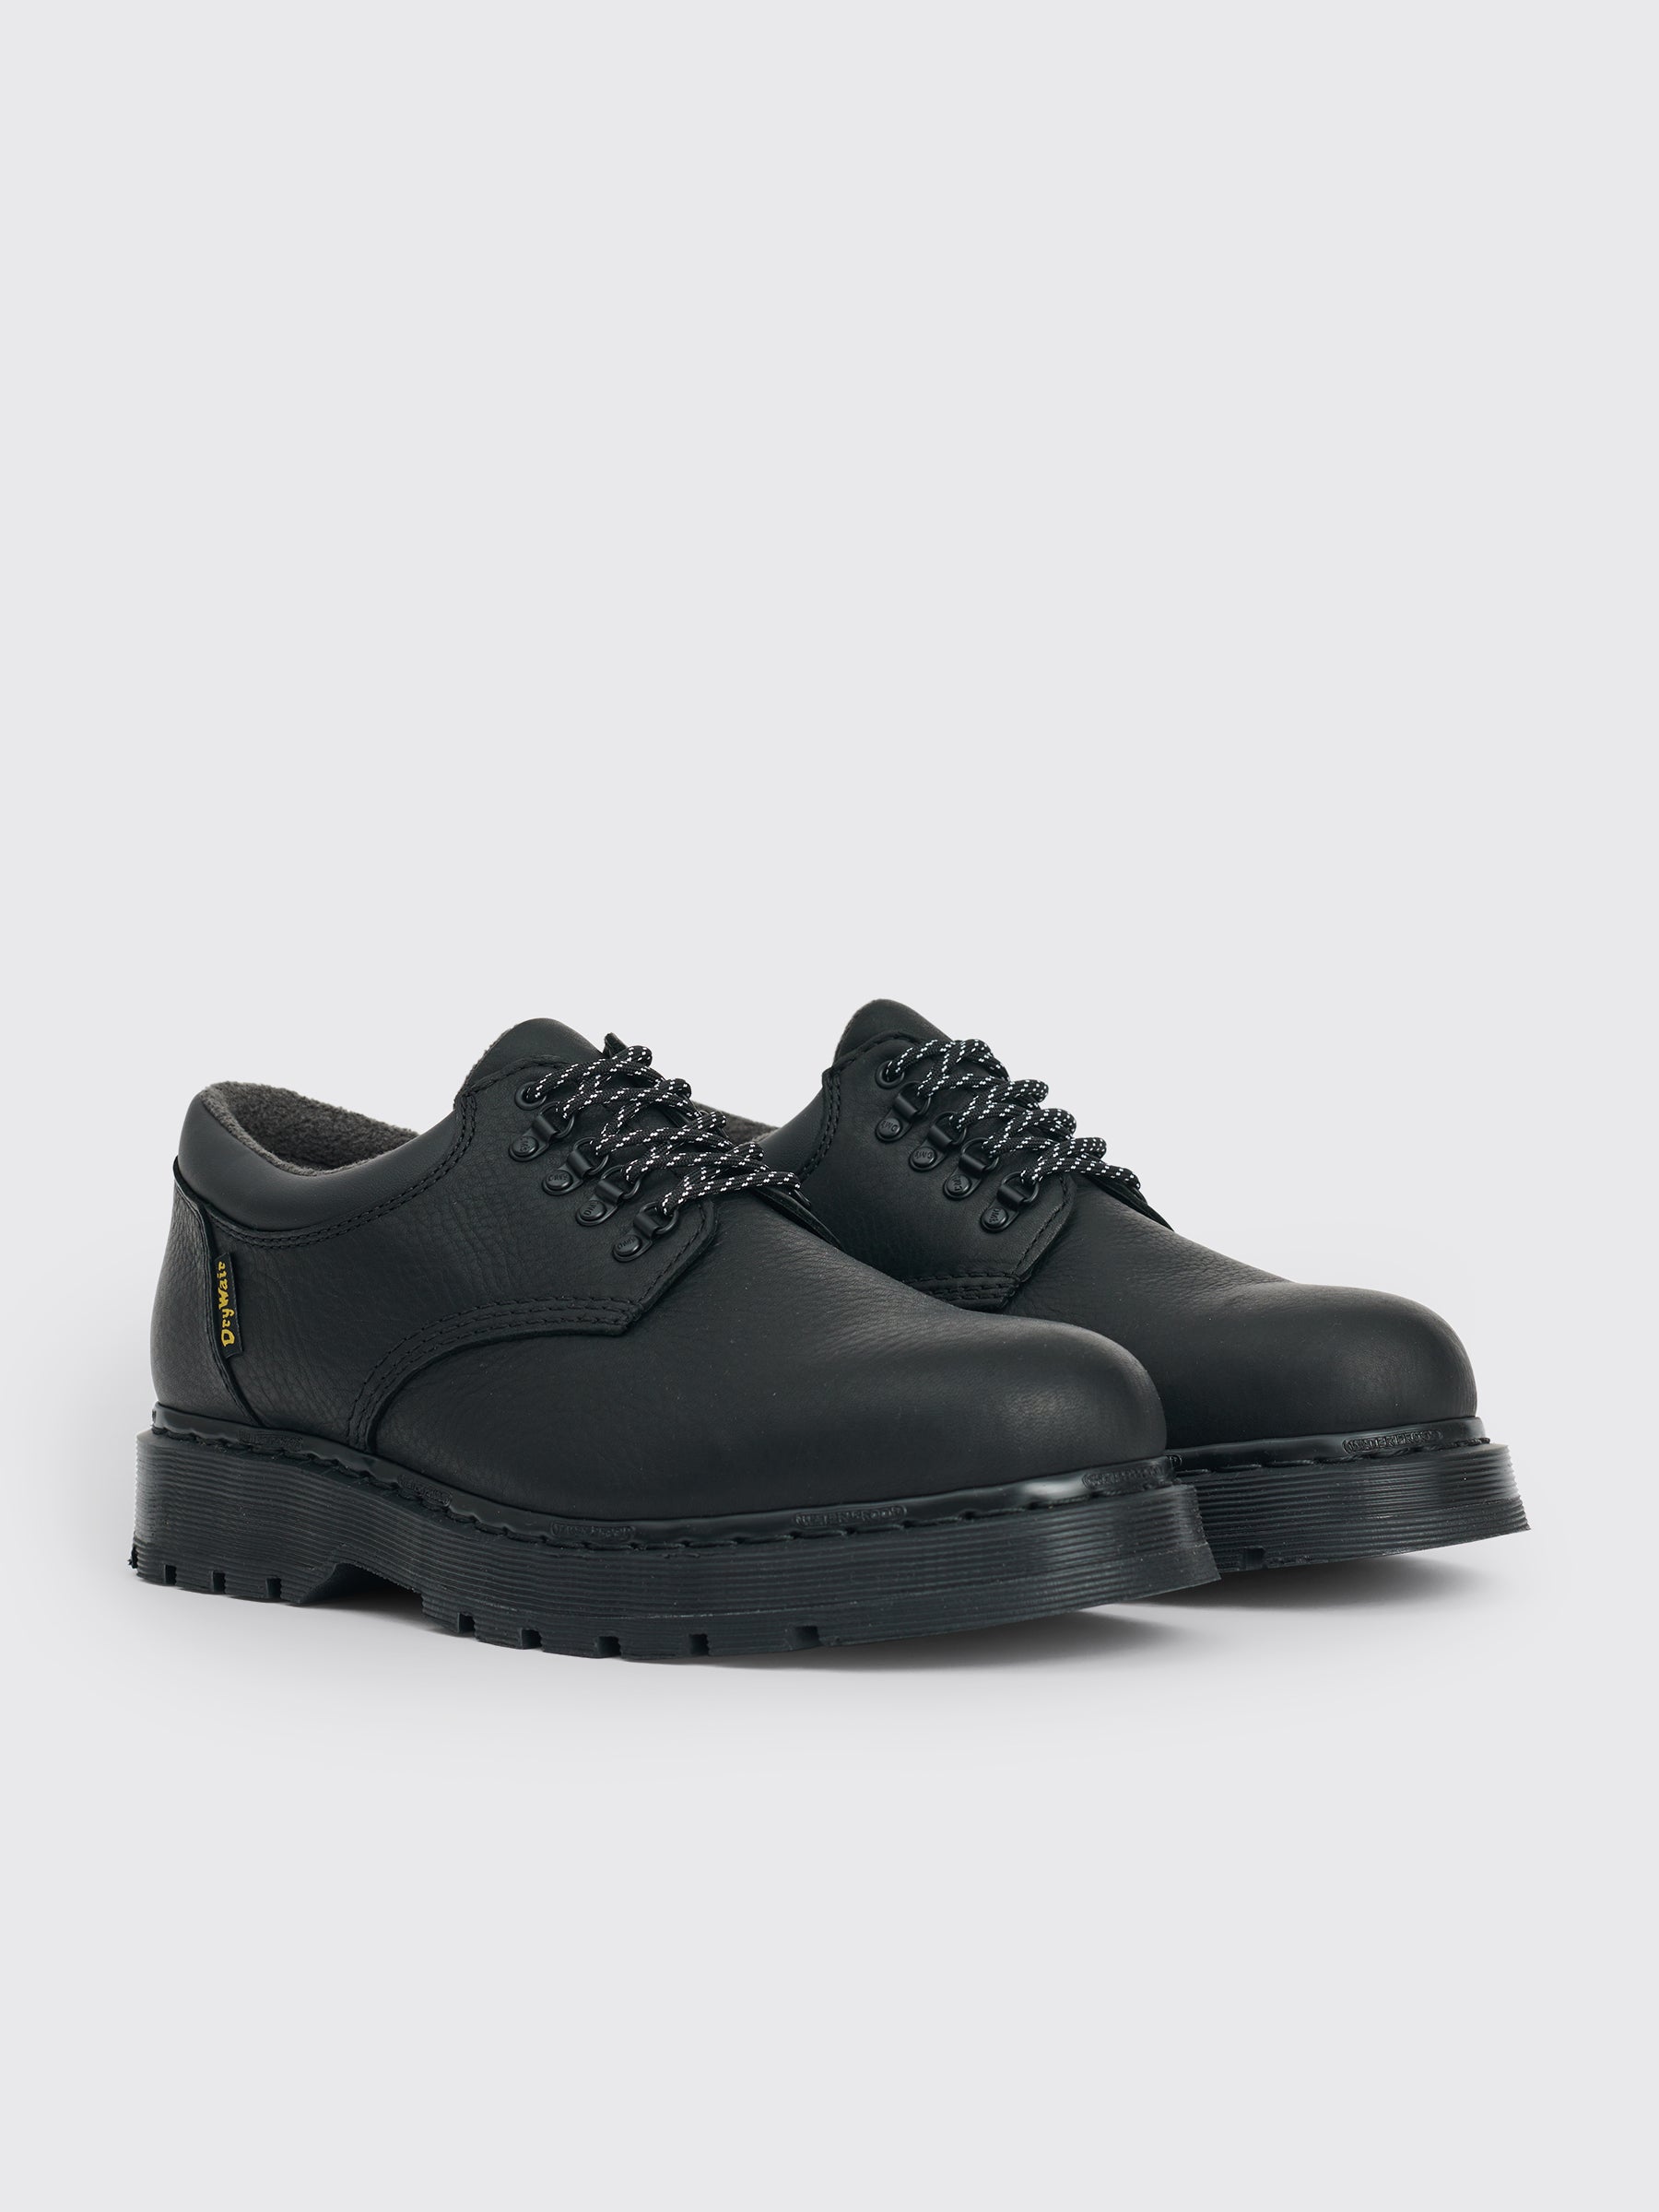 Dr. Martens 8053 Shoes Tailgate WP Black